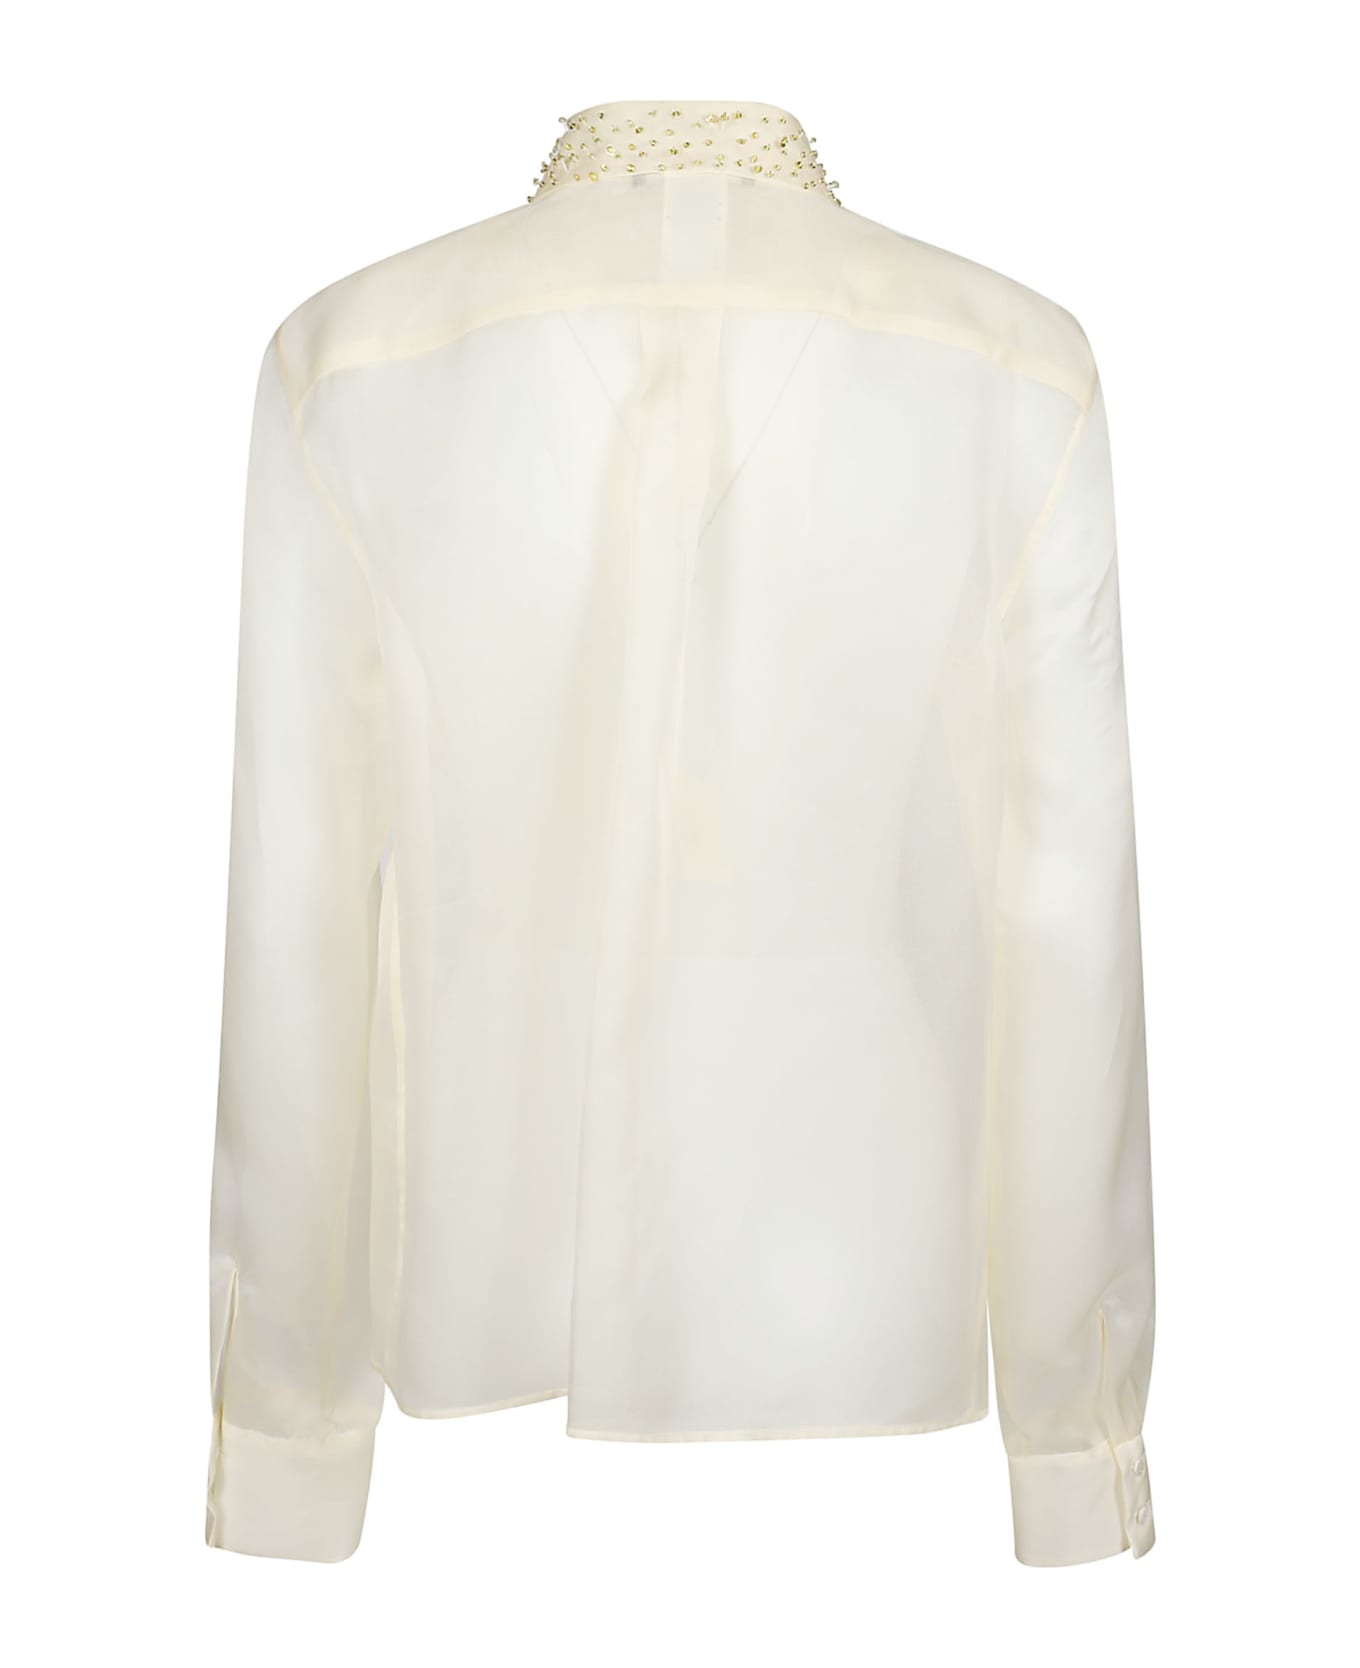 Fabiana Filippi Long Sleeve Shirt - Grigio/bianco/oro